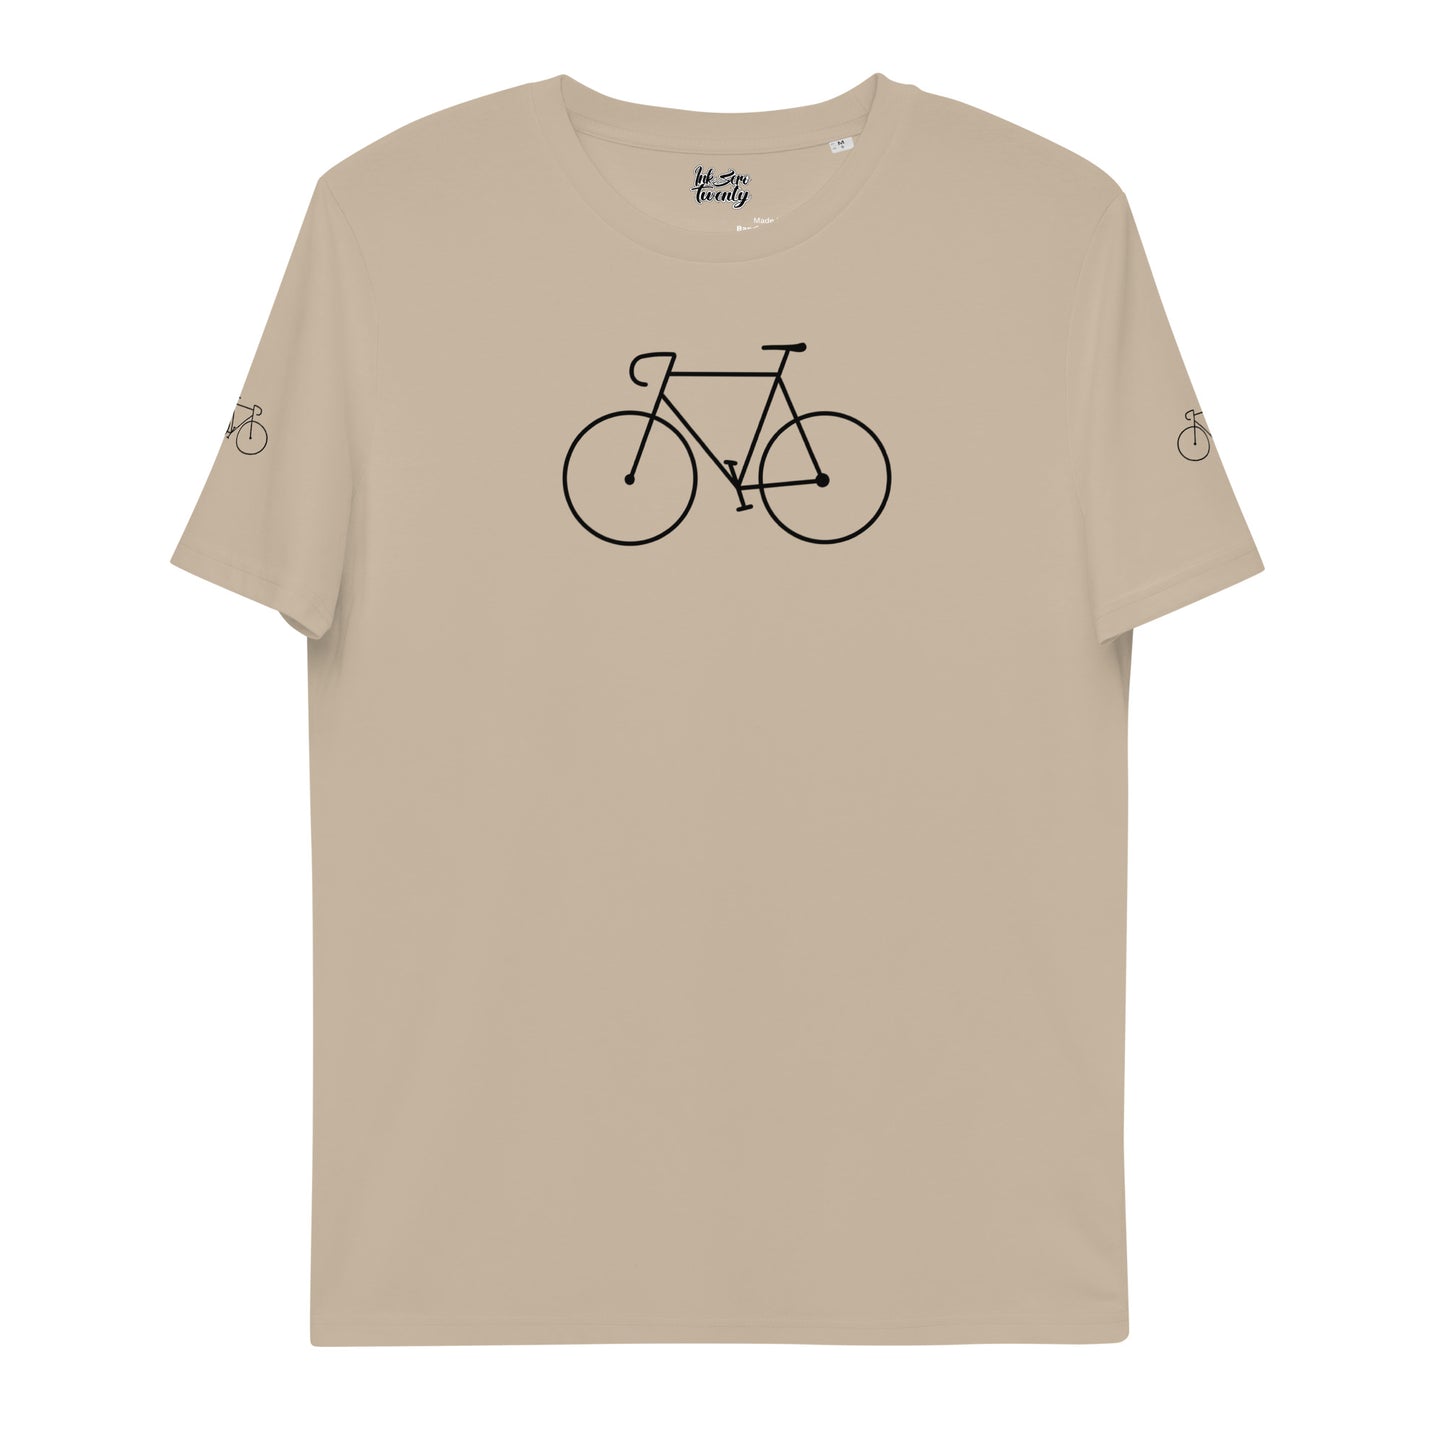 Unisex organic cotton t-shirt black bicycle tattoo print